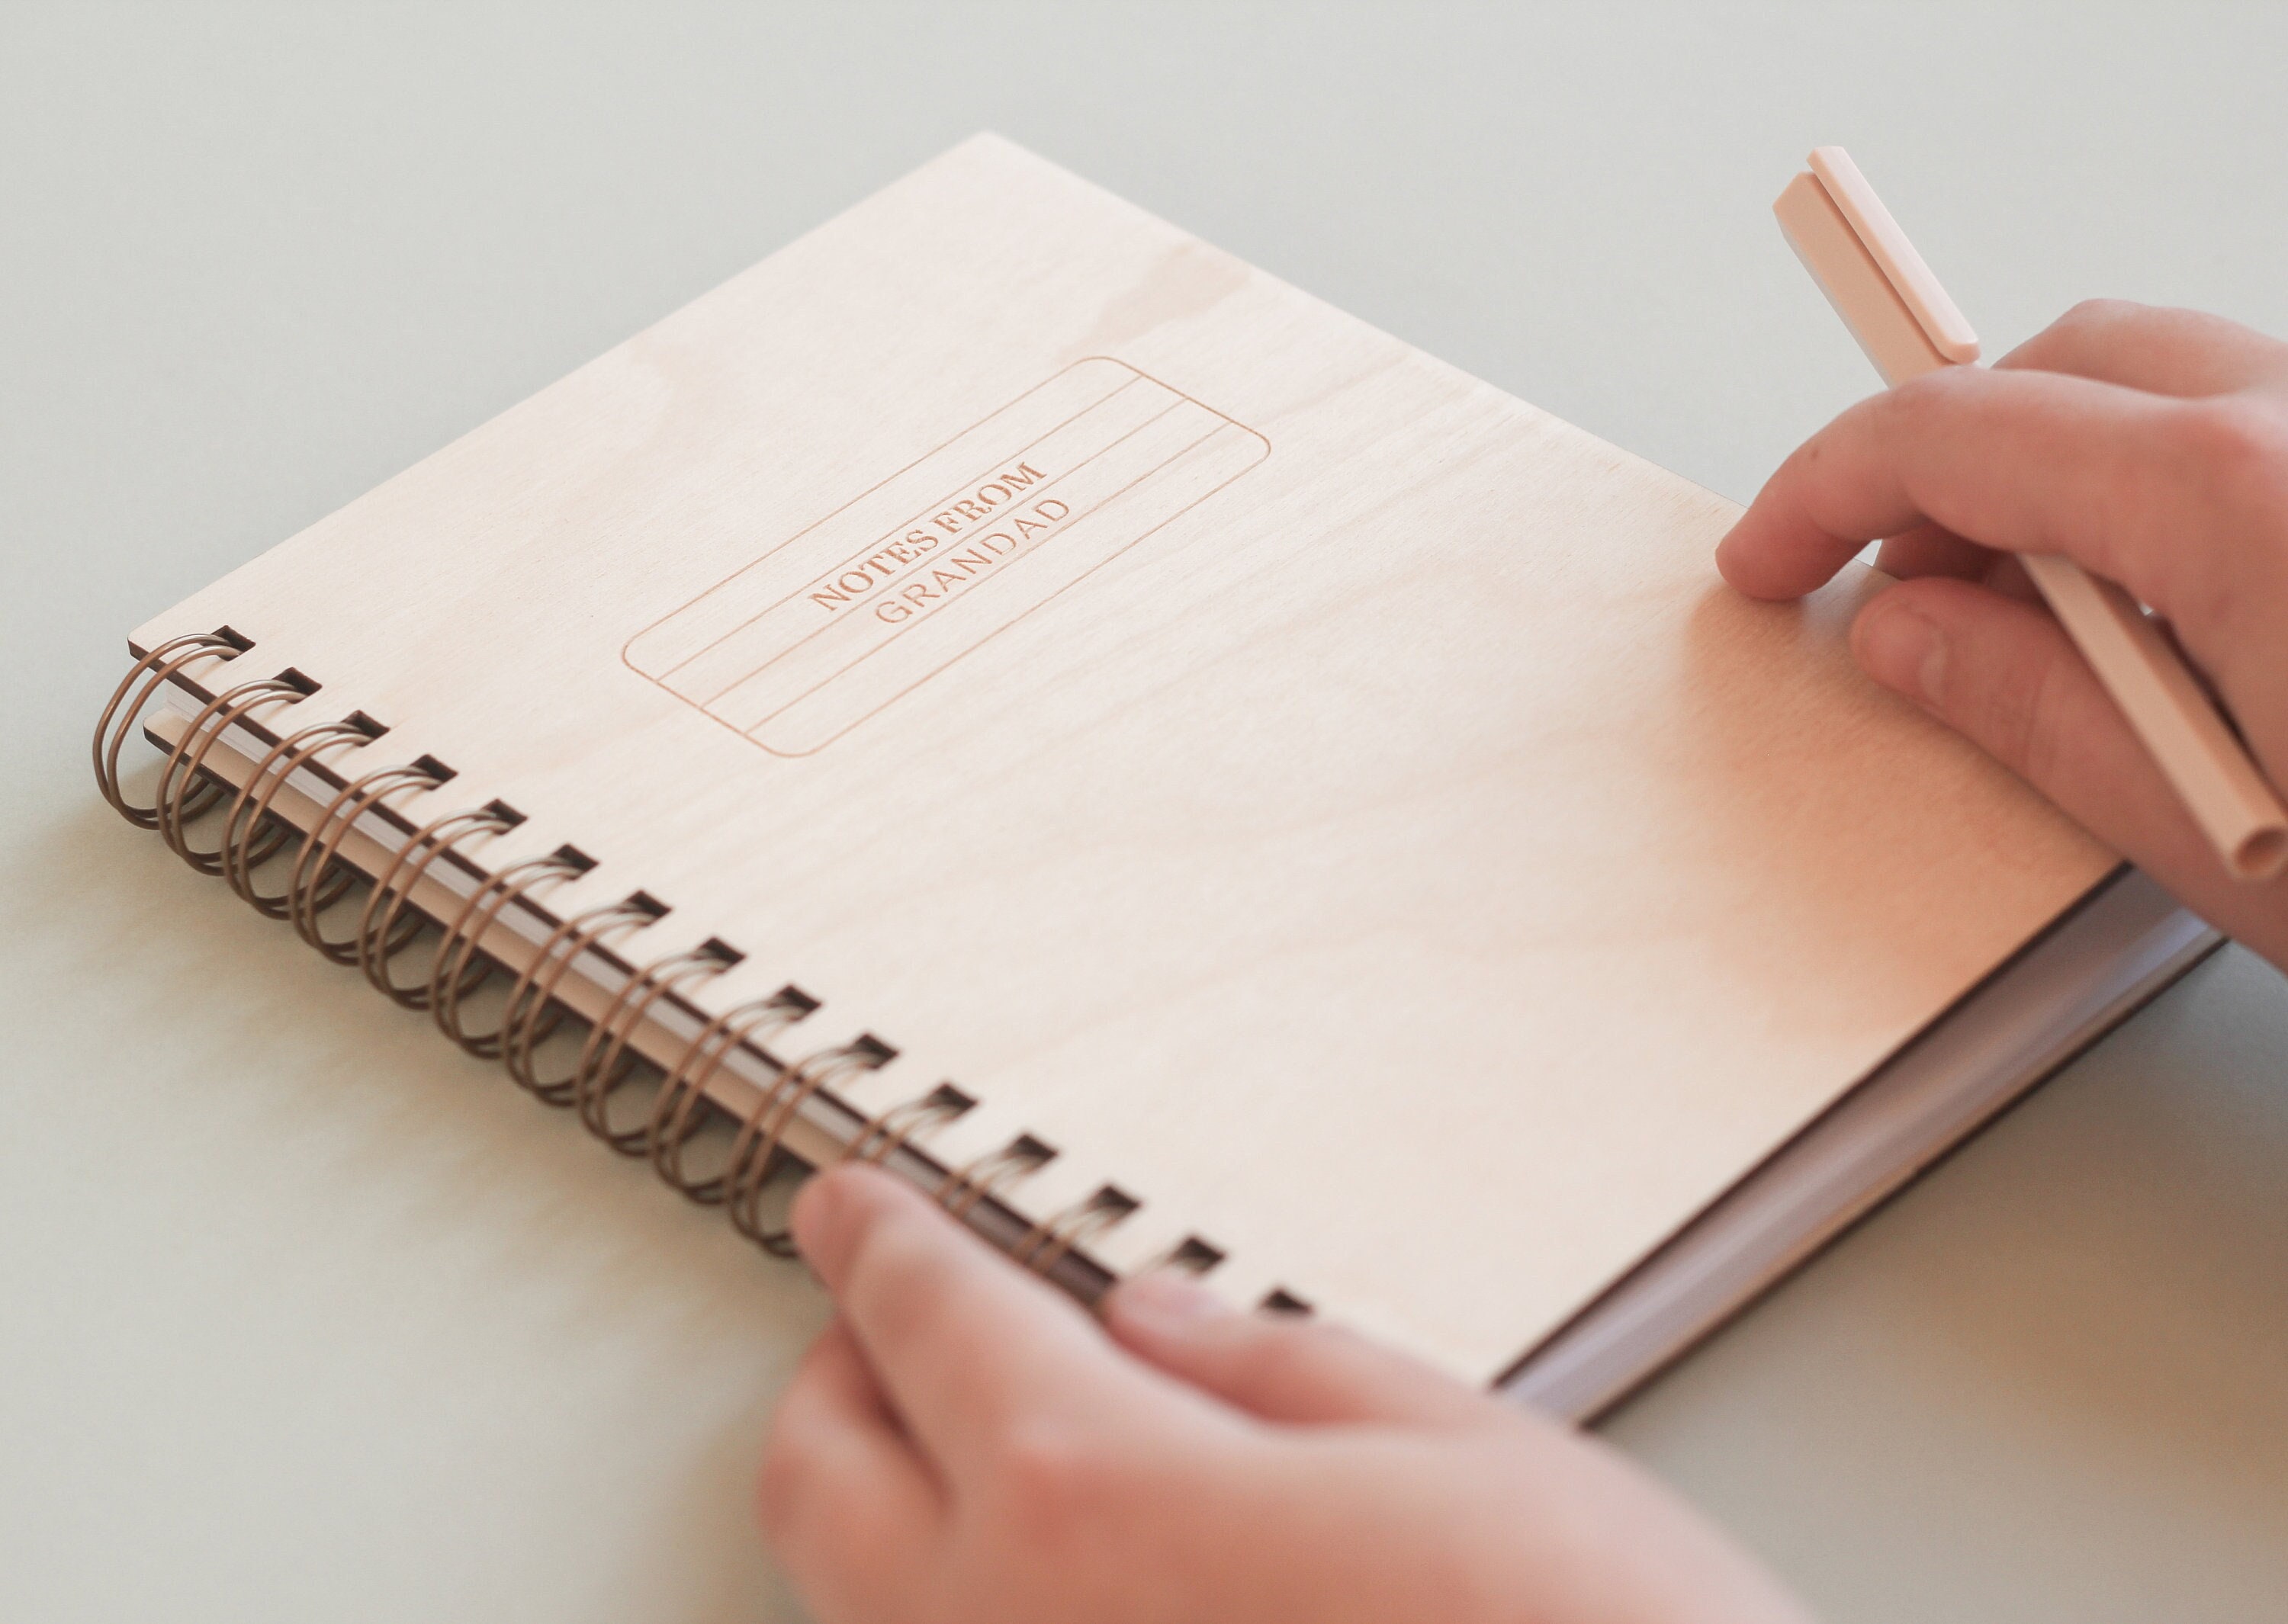 Peonies Wood Journal [Notebook, Sketchbook, Spiral Bound, Blank Pages]